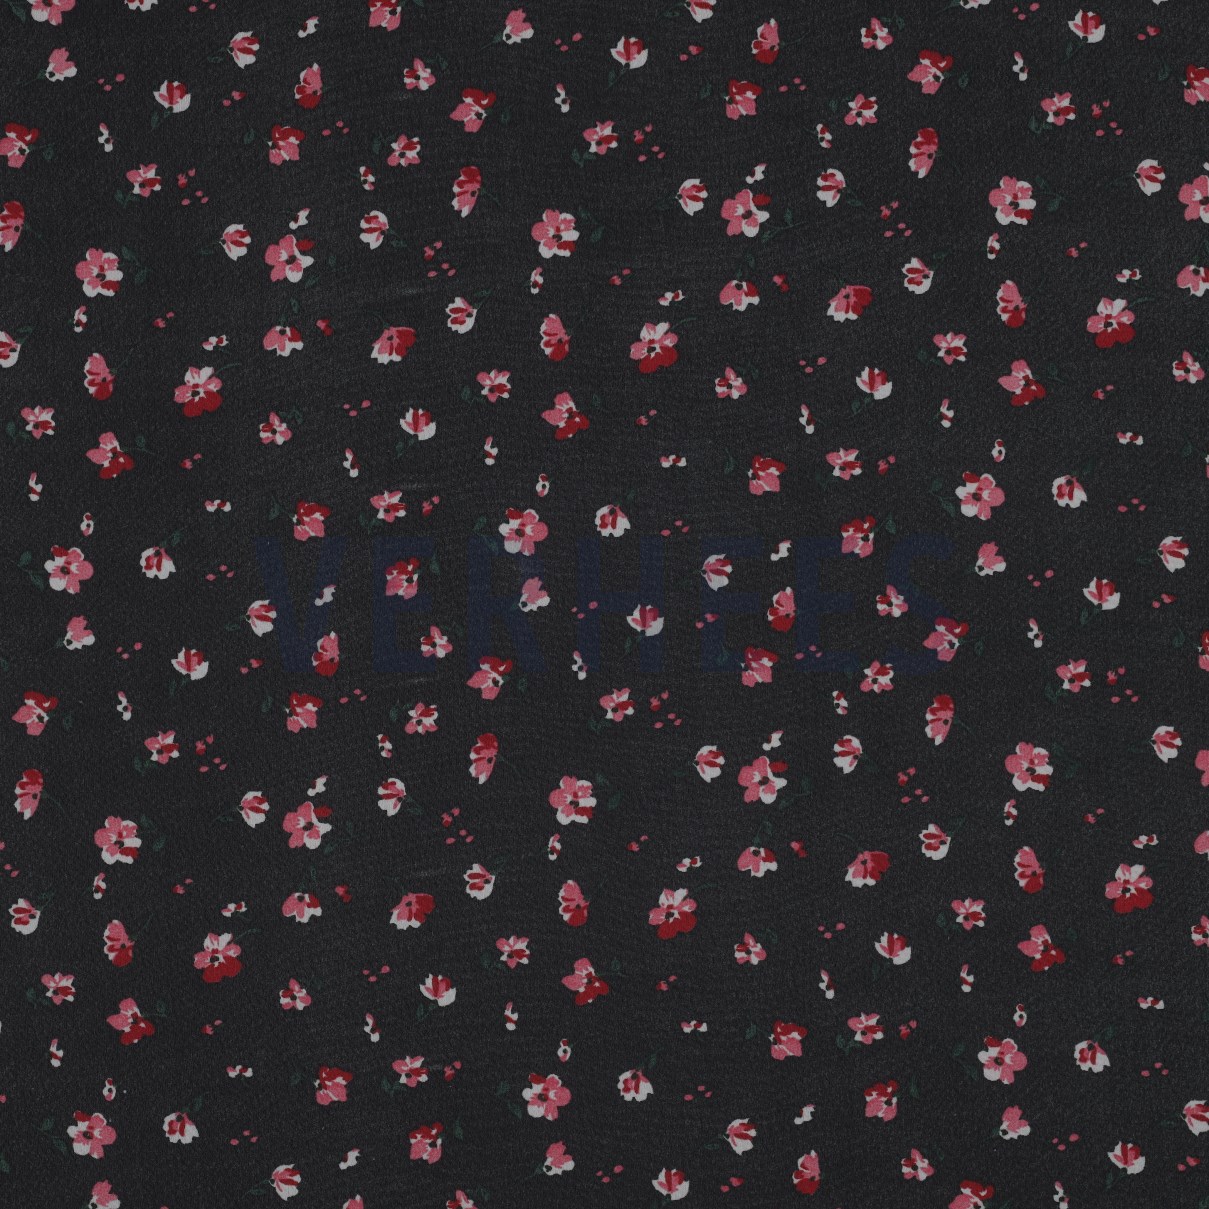 CHIFFON FLOWERS BLACK / PINK (high resolution)